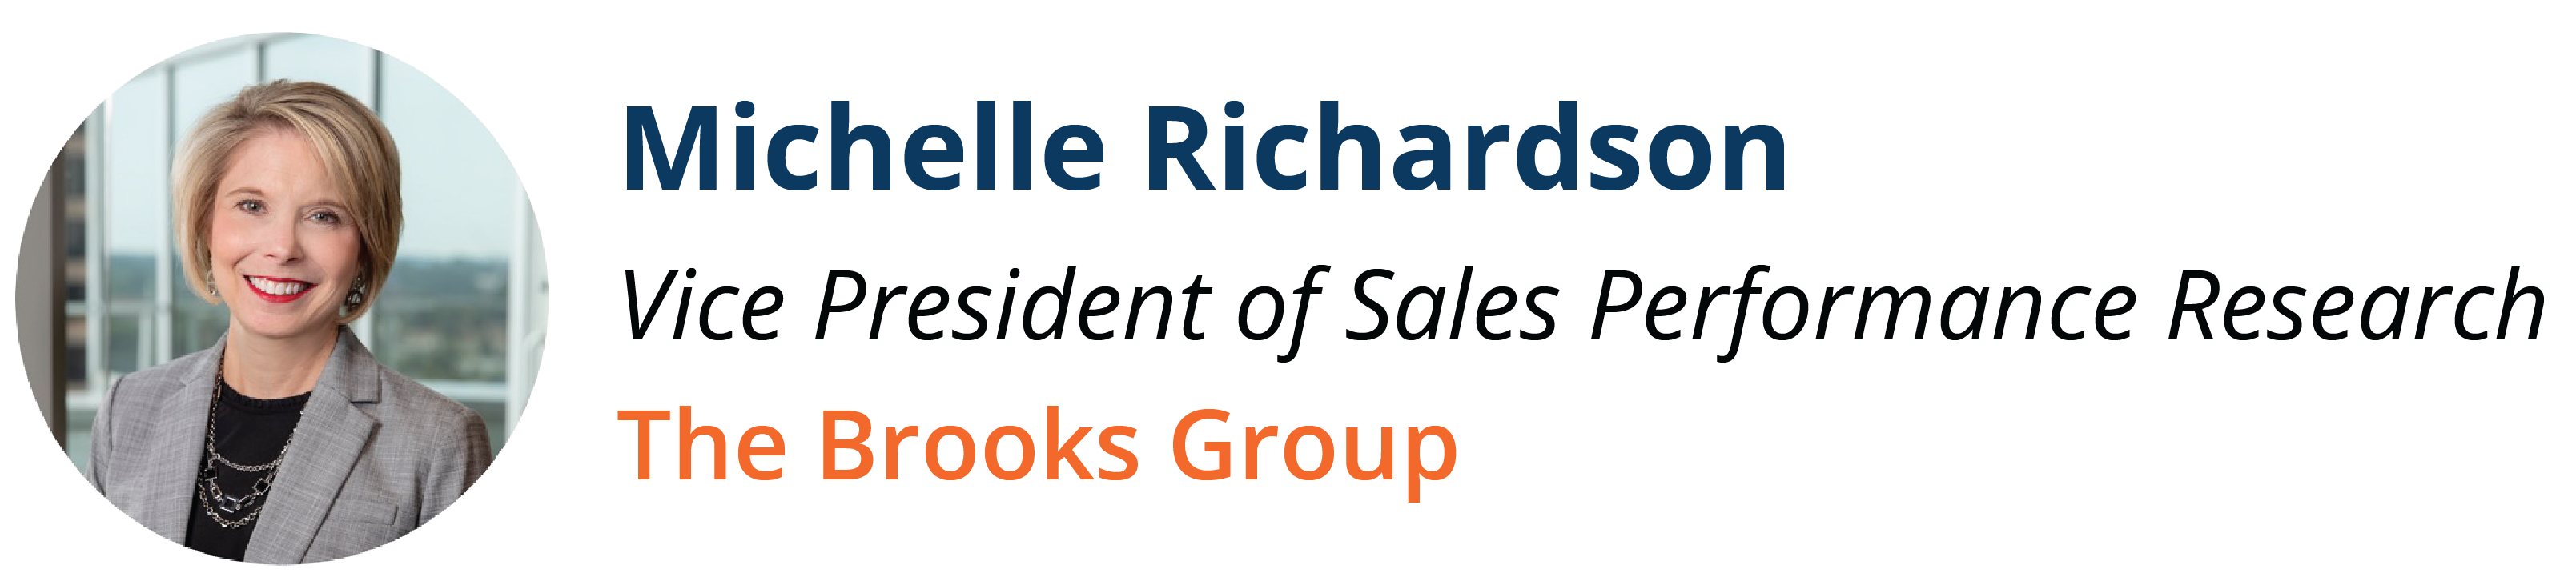 Michelle Richardson Webinar Speaker VP of Sales Performance Research